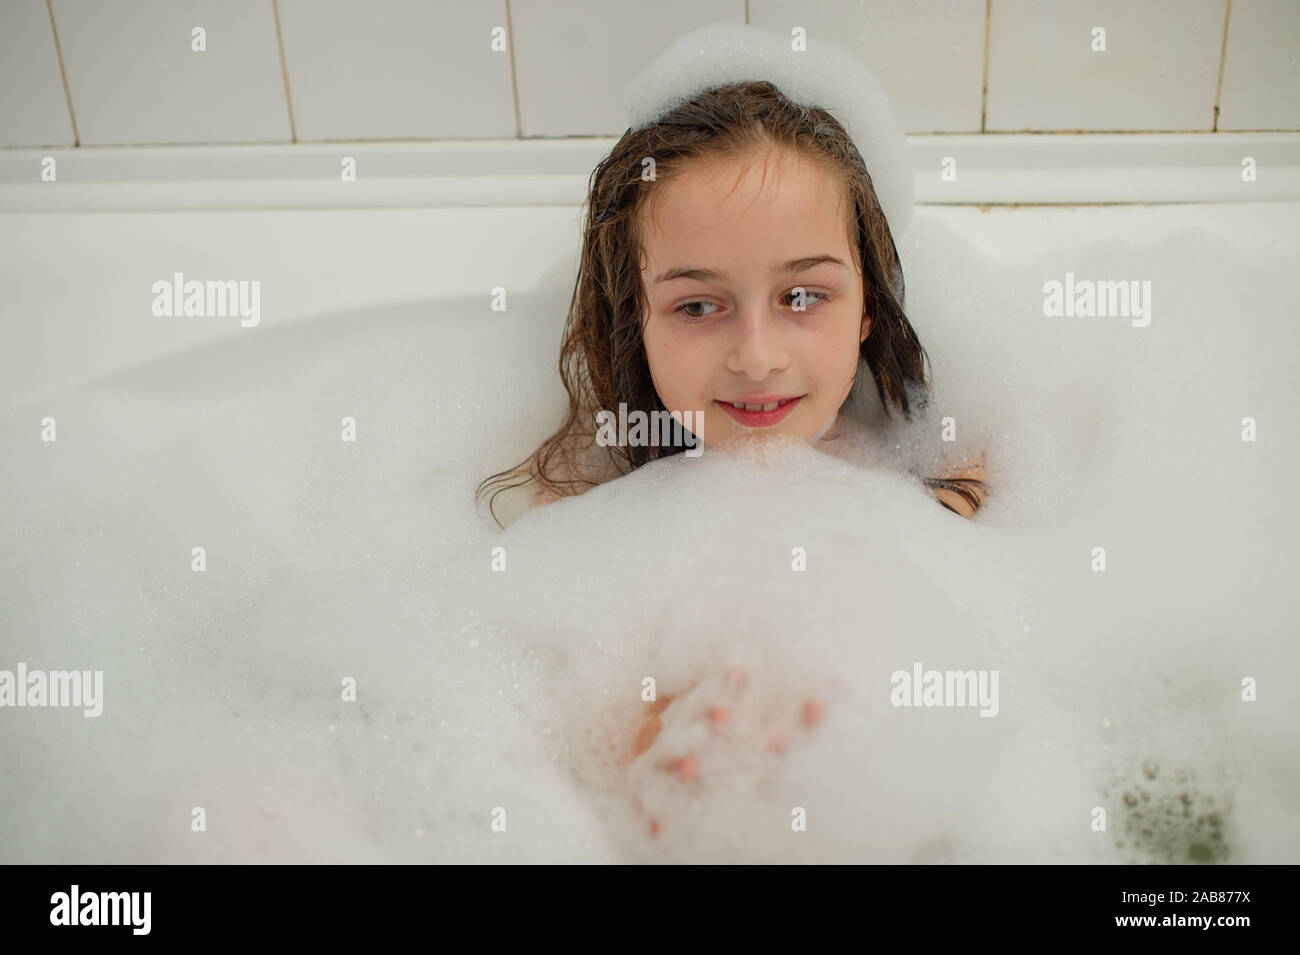 Young girl inside the bath. A little girl bathes in a bathtub with foam ...